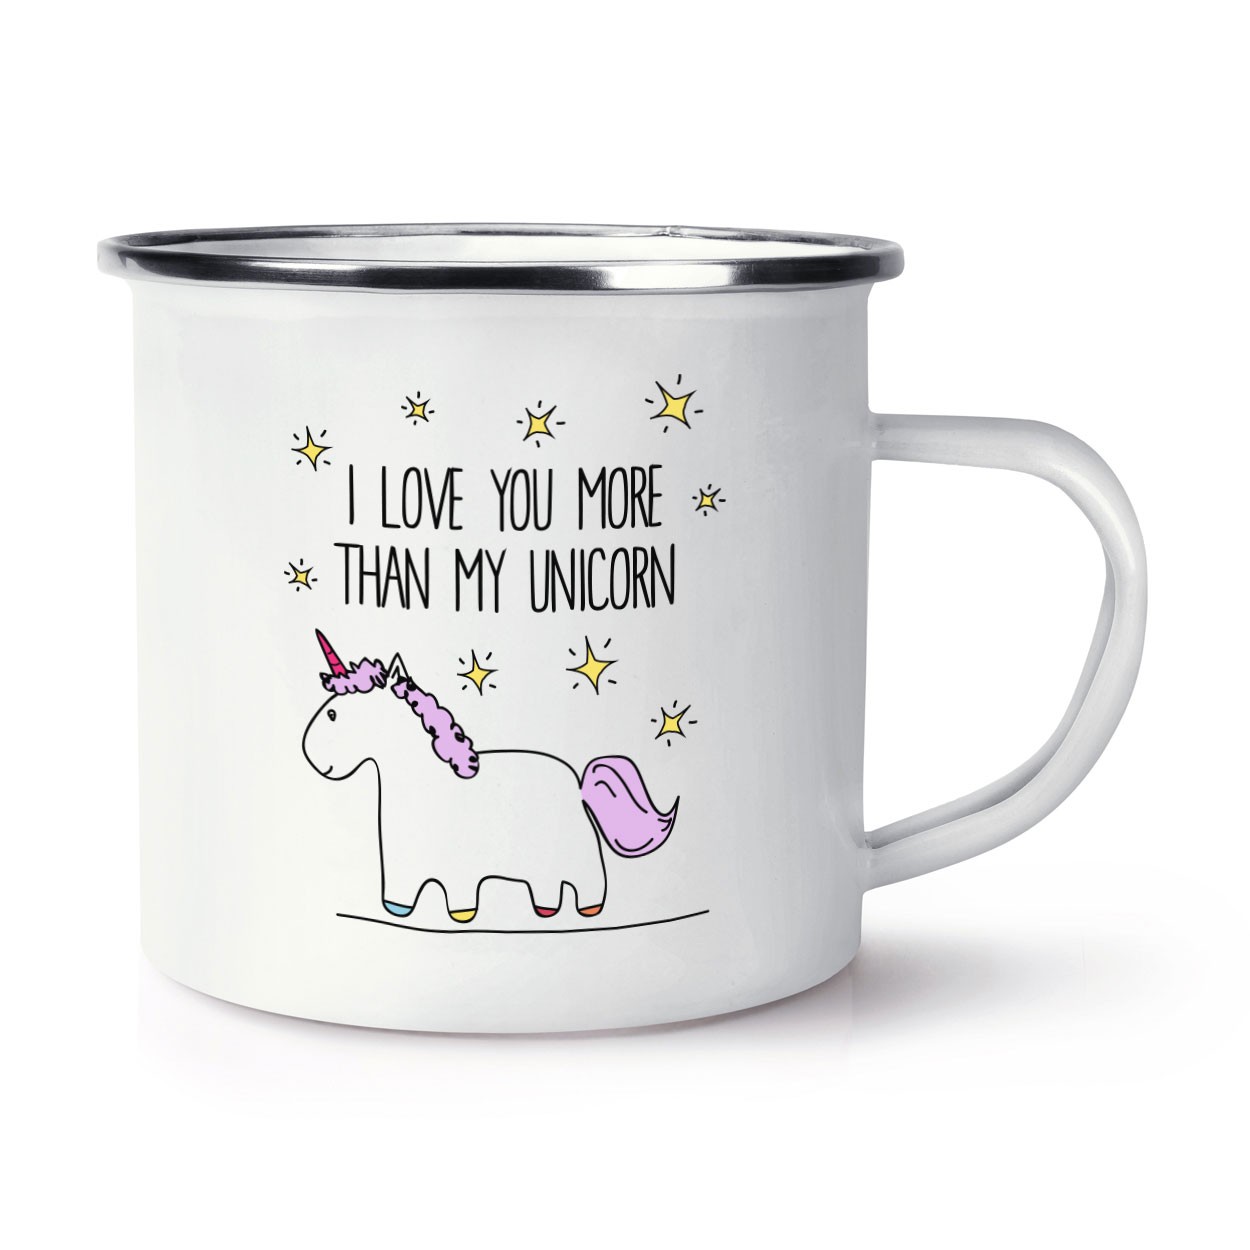 I Love You More Than My Unicorn Retro Enamel Mug Cup